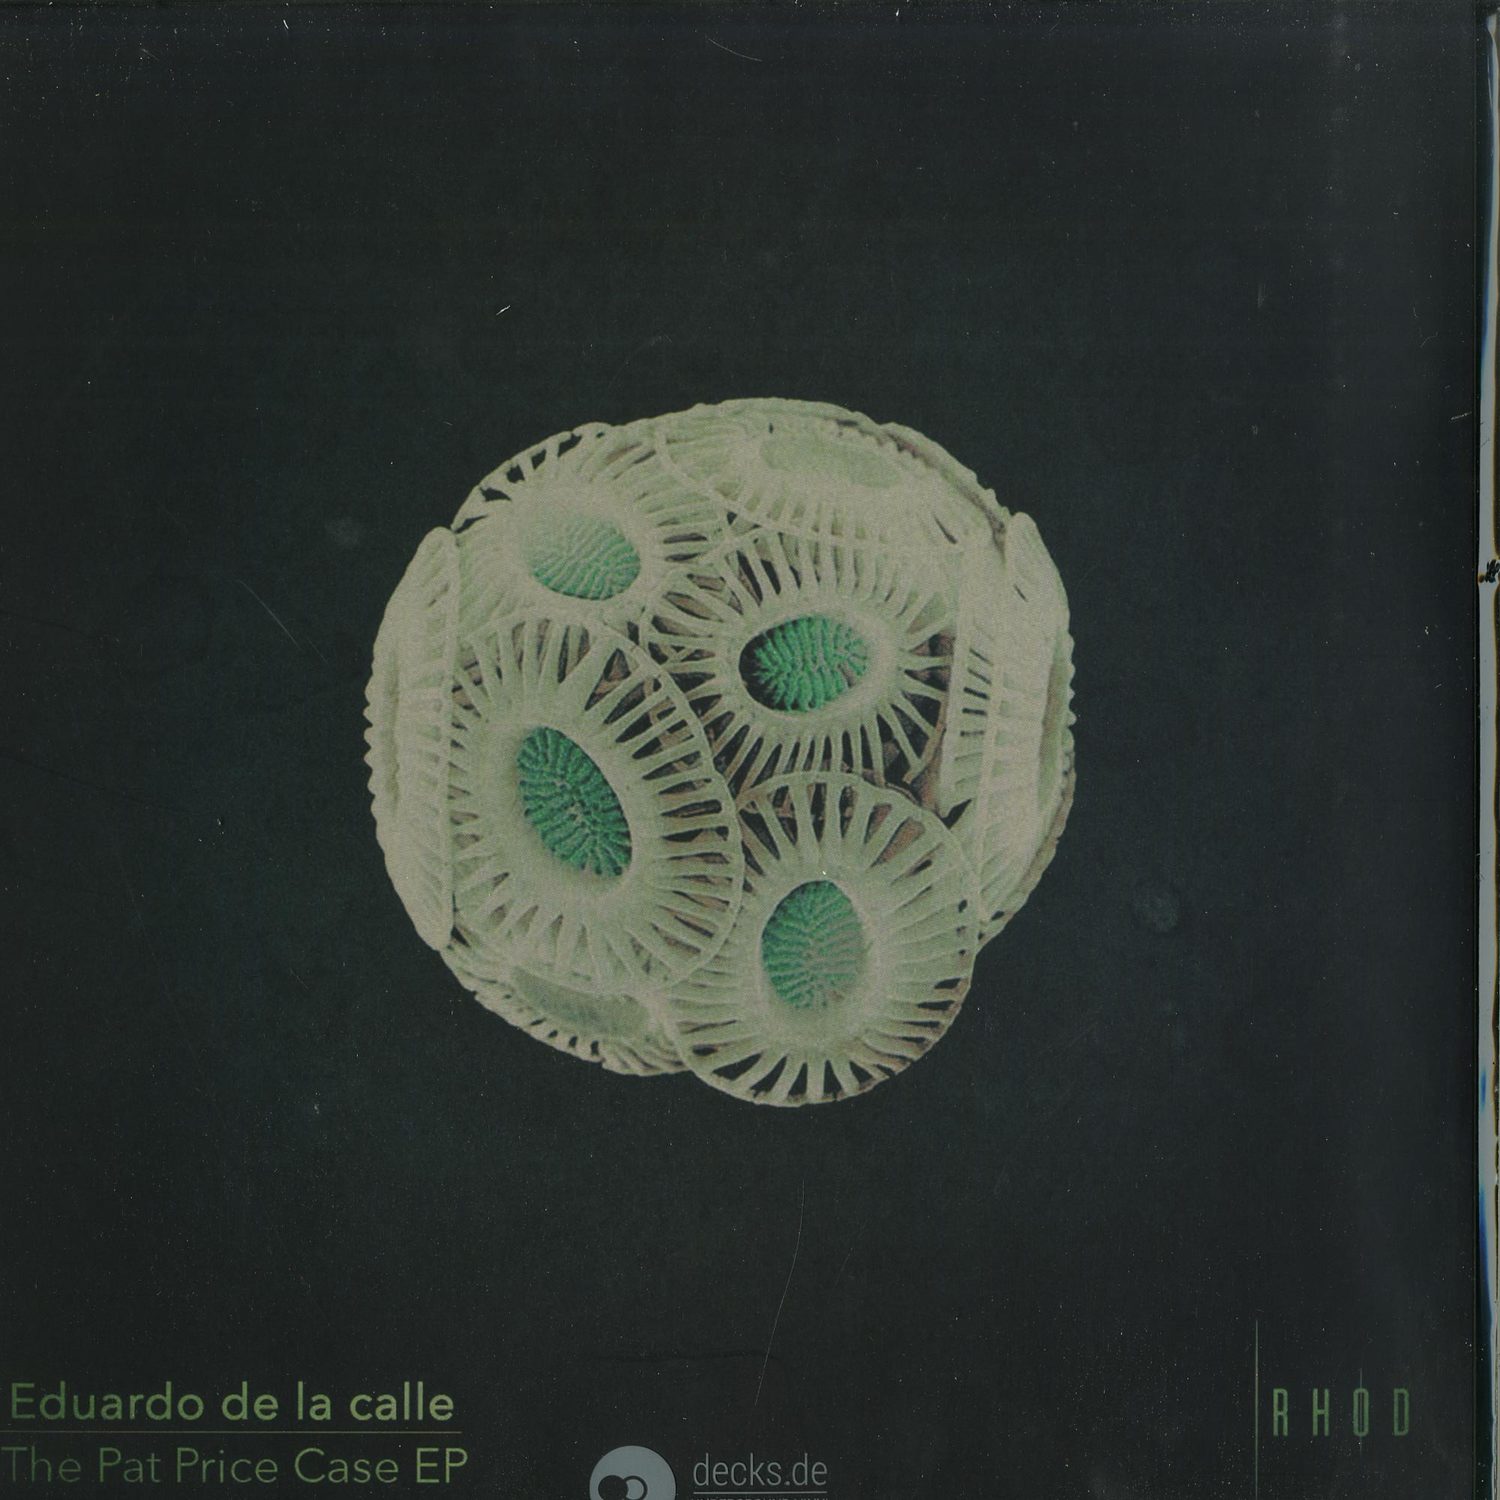 Eduardo De La Calle - THE PAT PRICE CASE EP